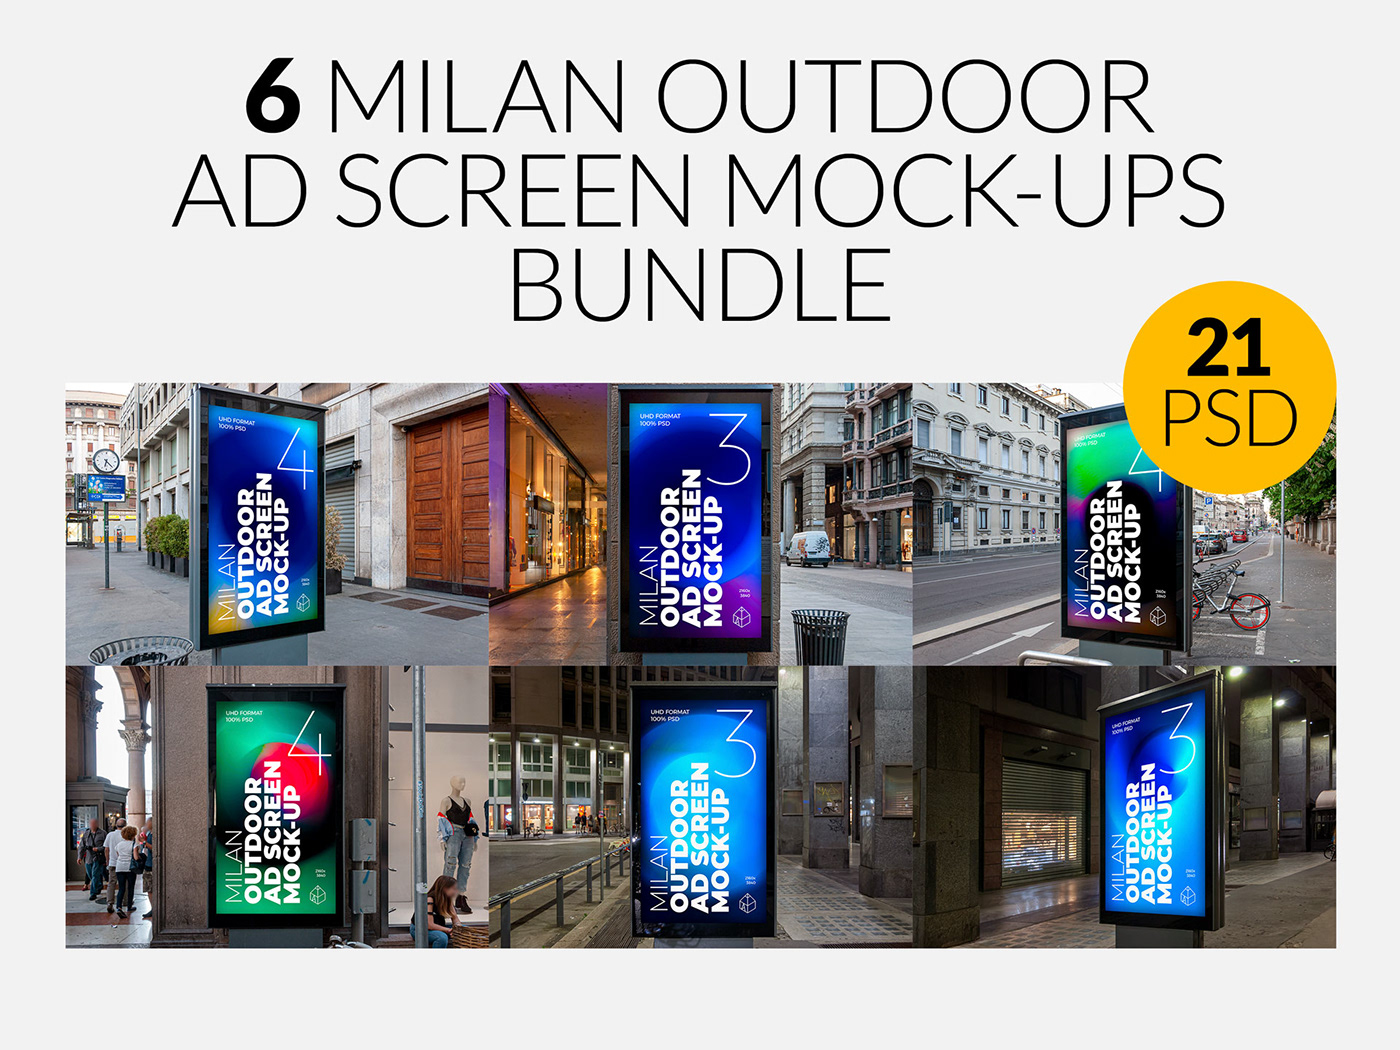 ad advertisement Advertising  milan mock-up Mockup Outdoor poster screen Street